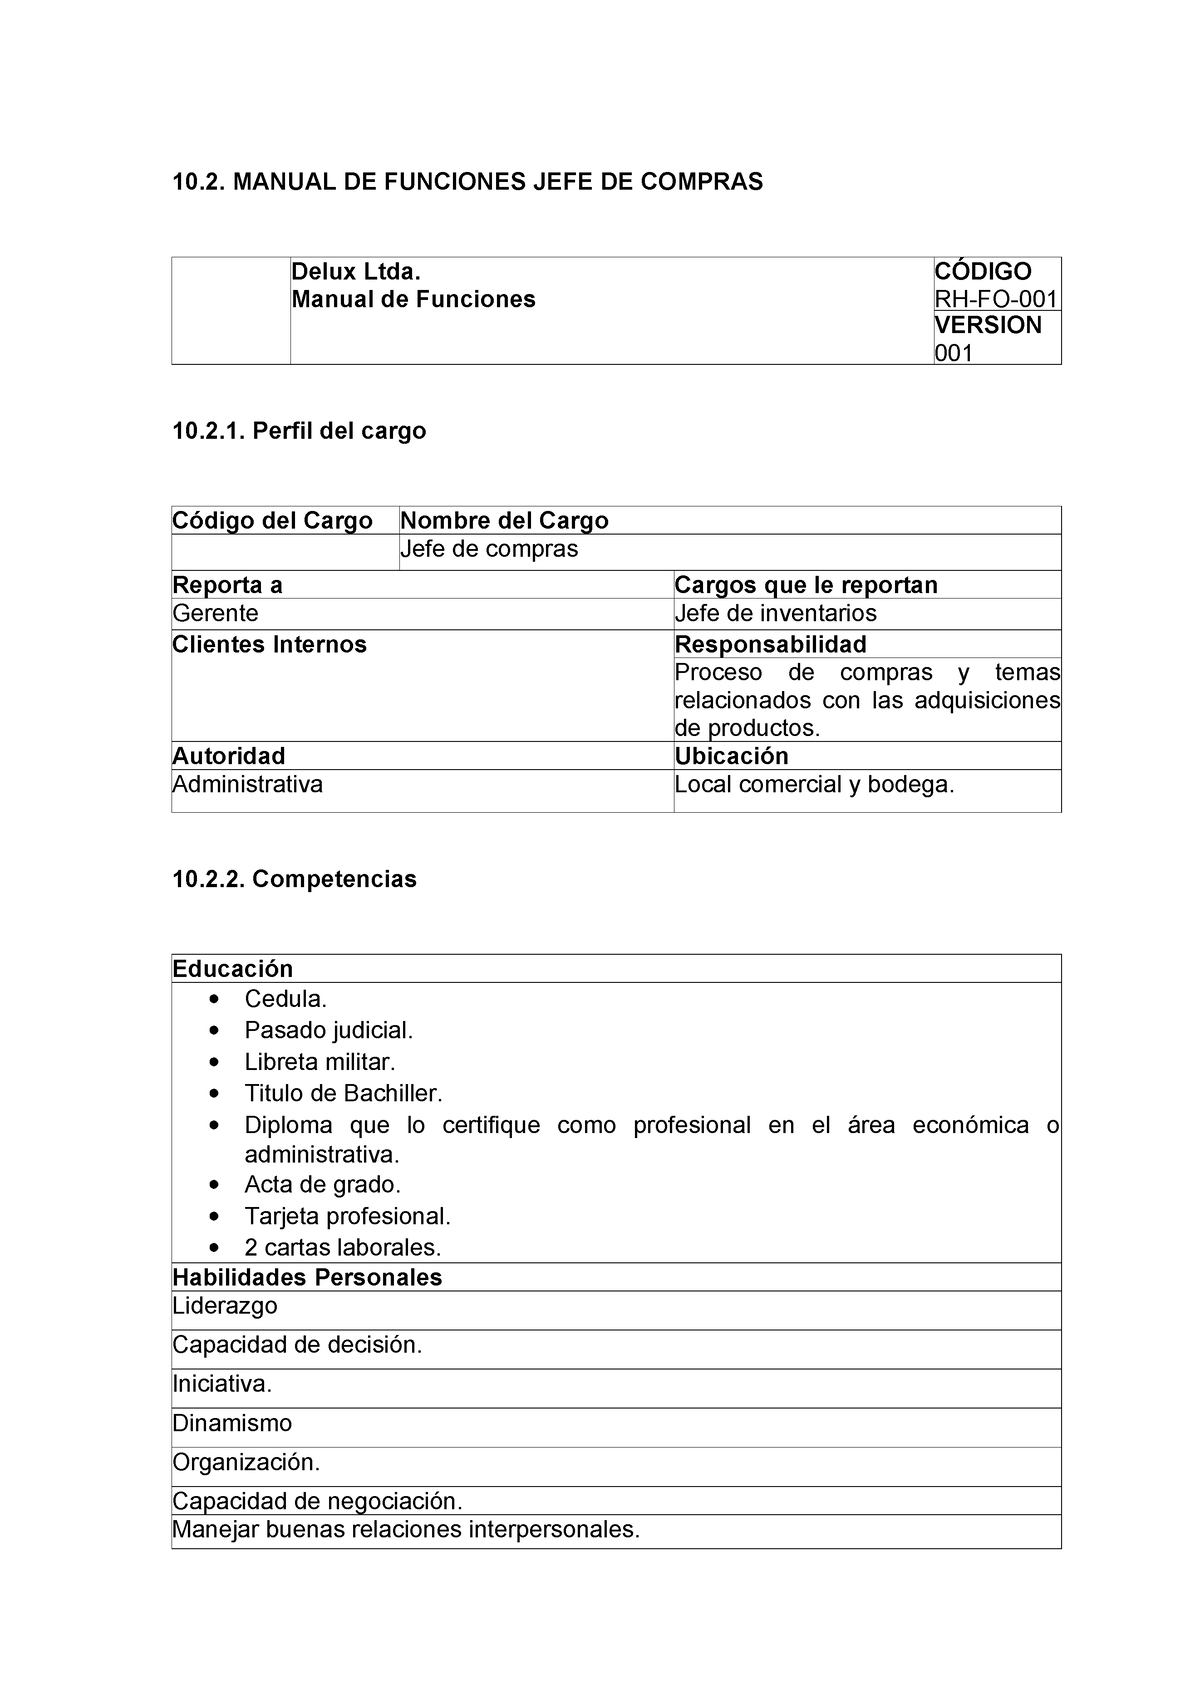 143814678 Manual Funciones Jefe De Compras 10 Manual De Funciones Jefe De Compras Delux Ltda 